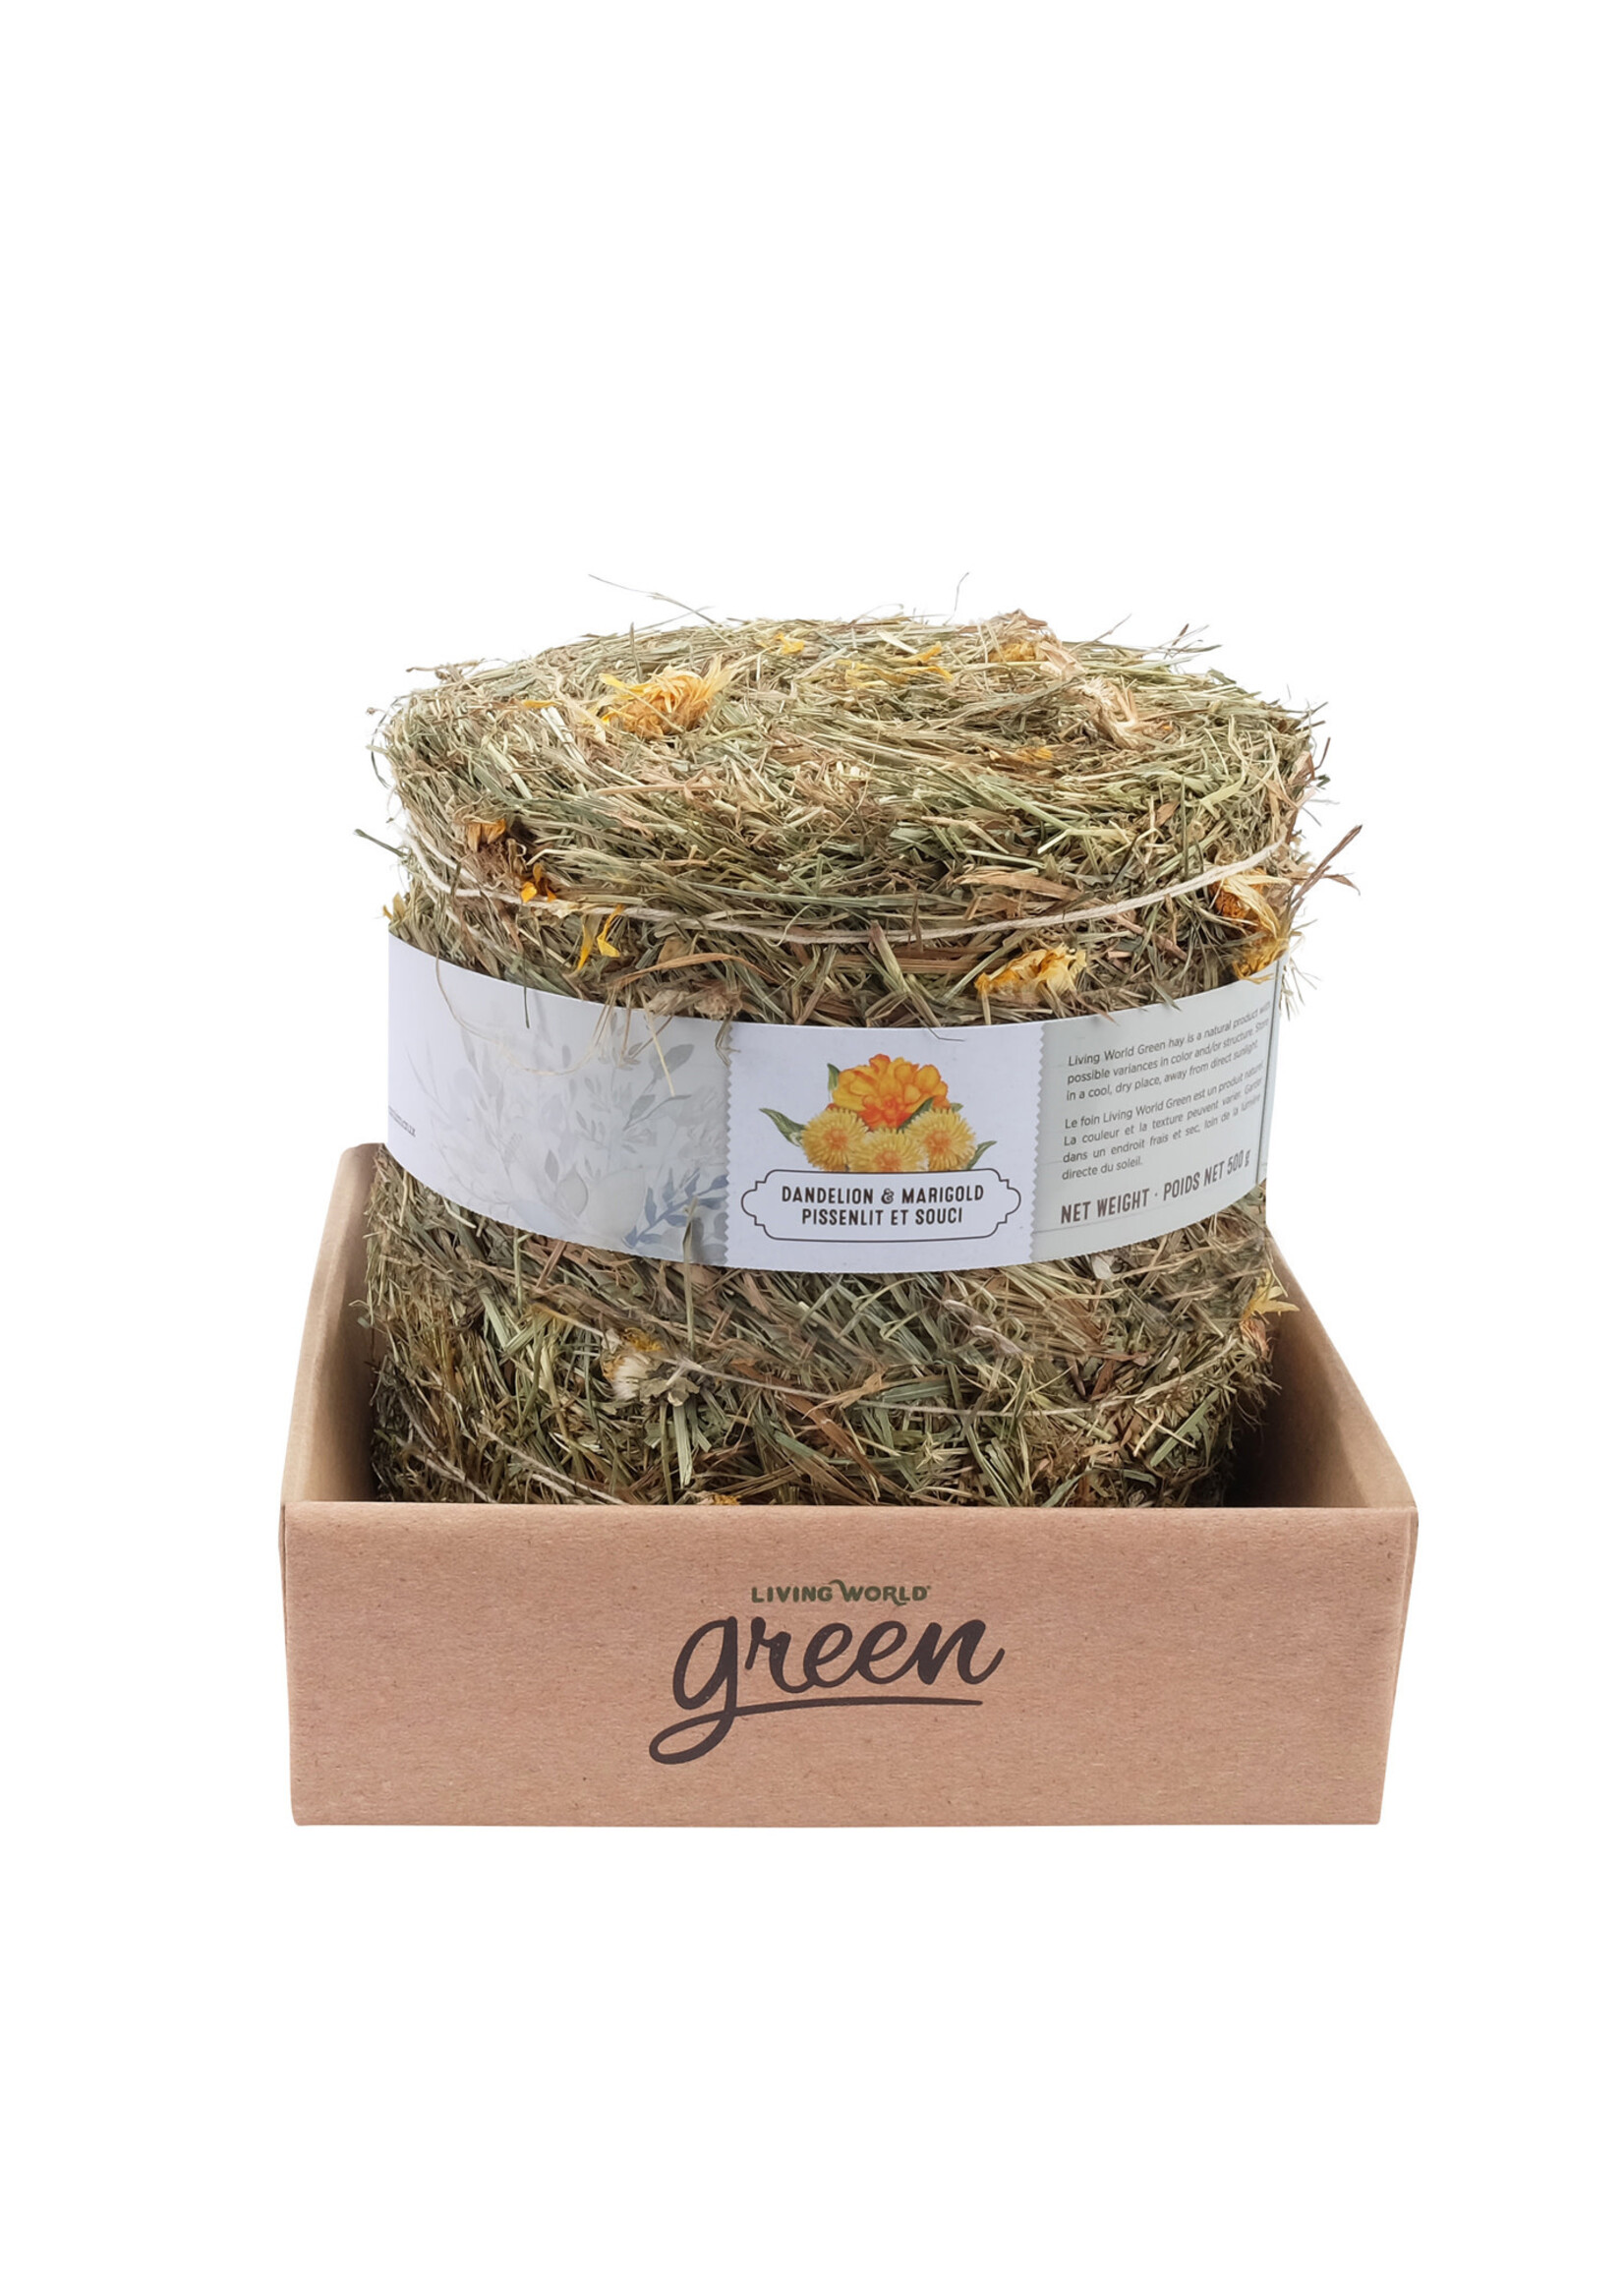 Living World Green Meadow Hay Bale - Dandelion & Marigold - 500 g